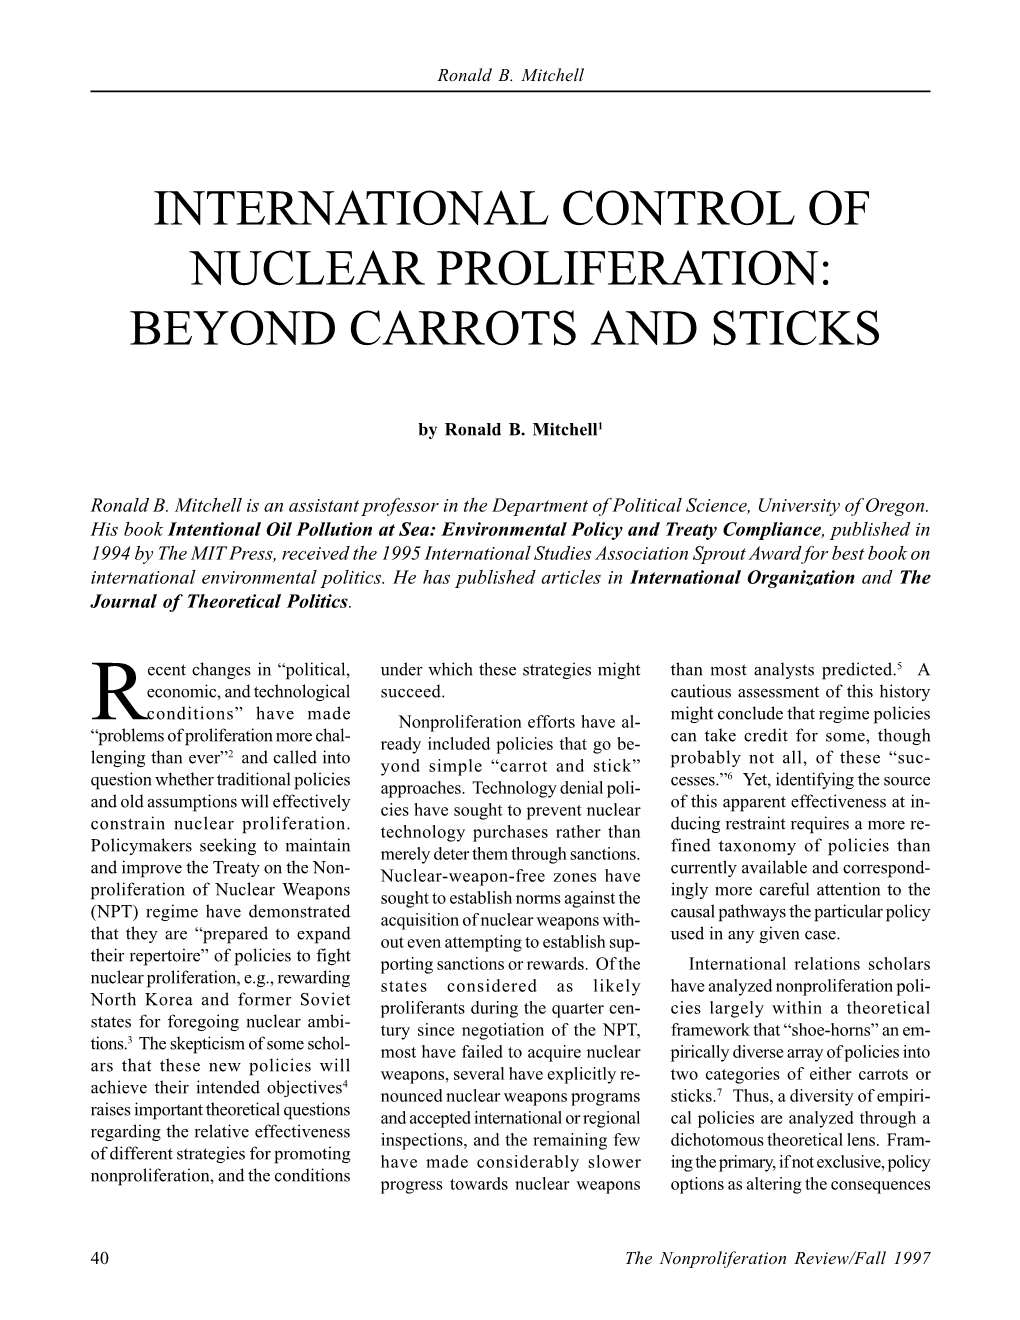 Beyond Carrots and Sticks